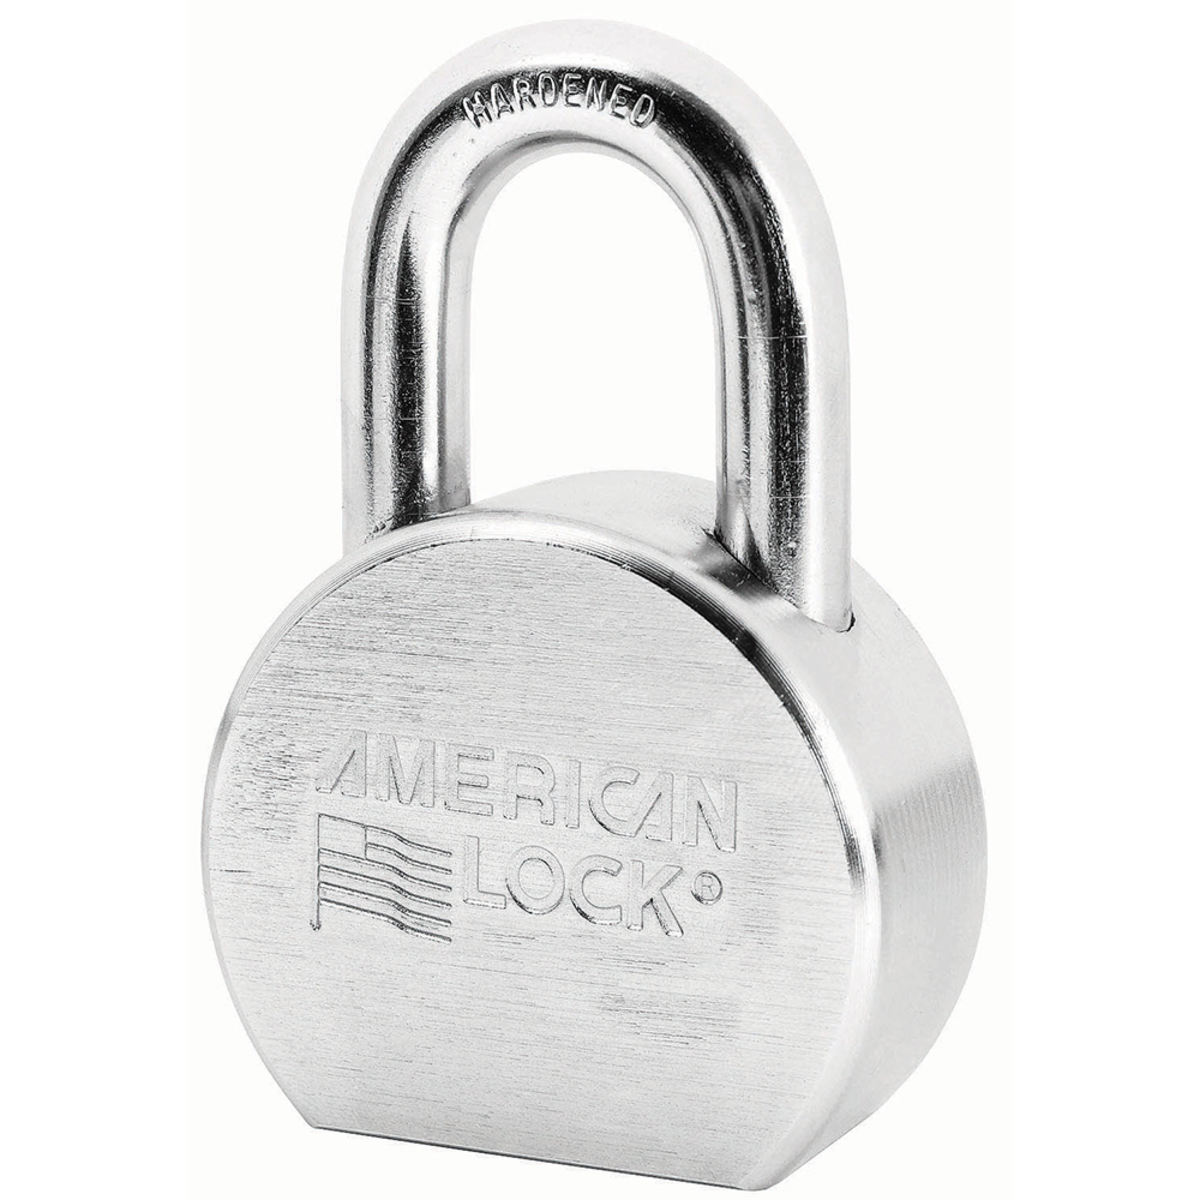 American Lock® Silver Solid Steel High Security Padlock Boron Alloy Shackle